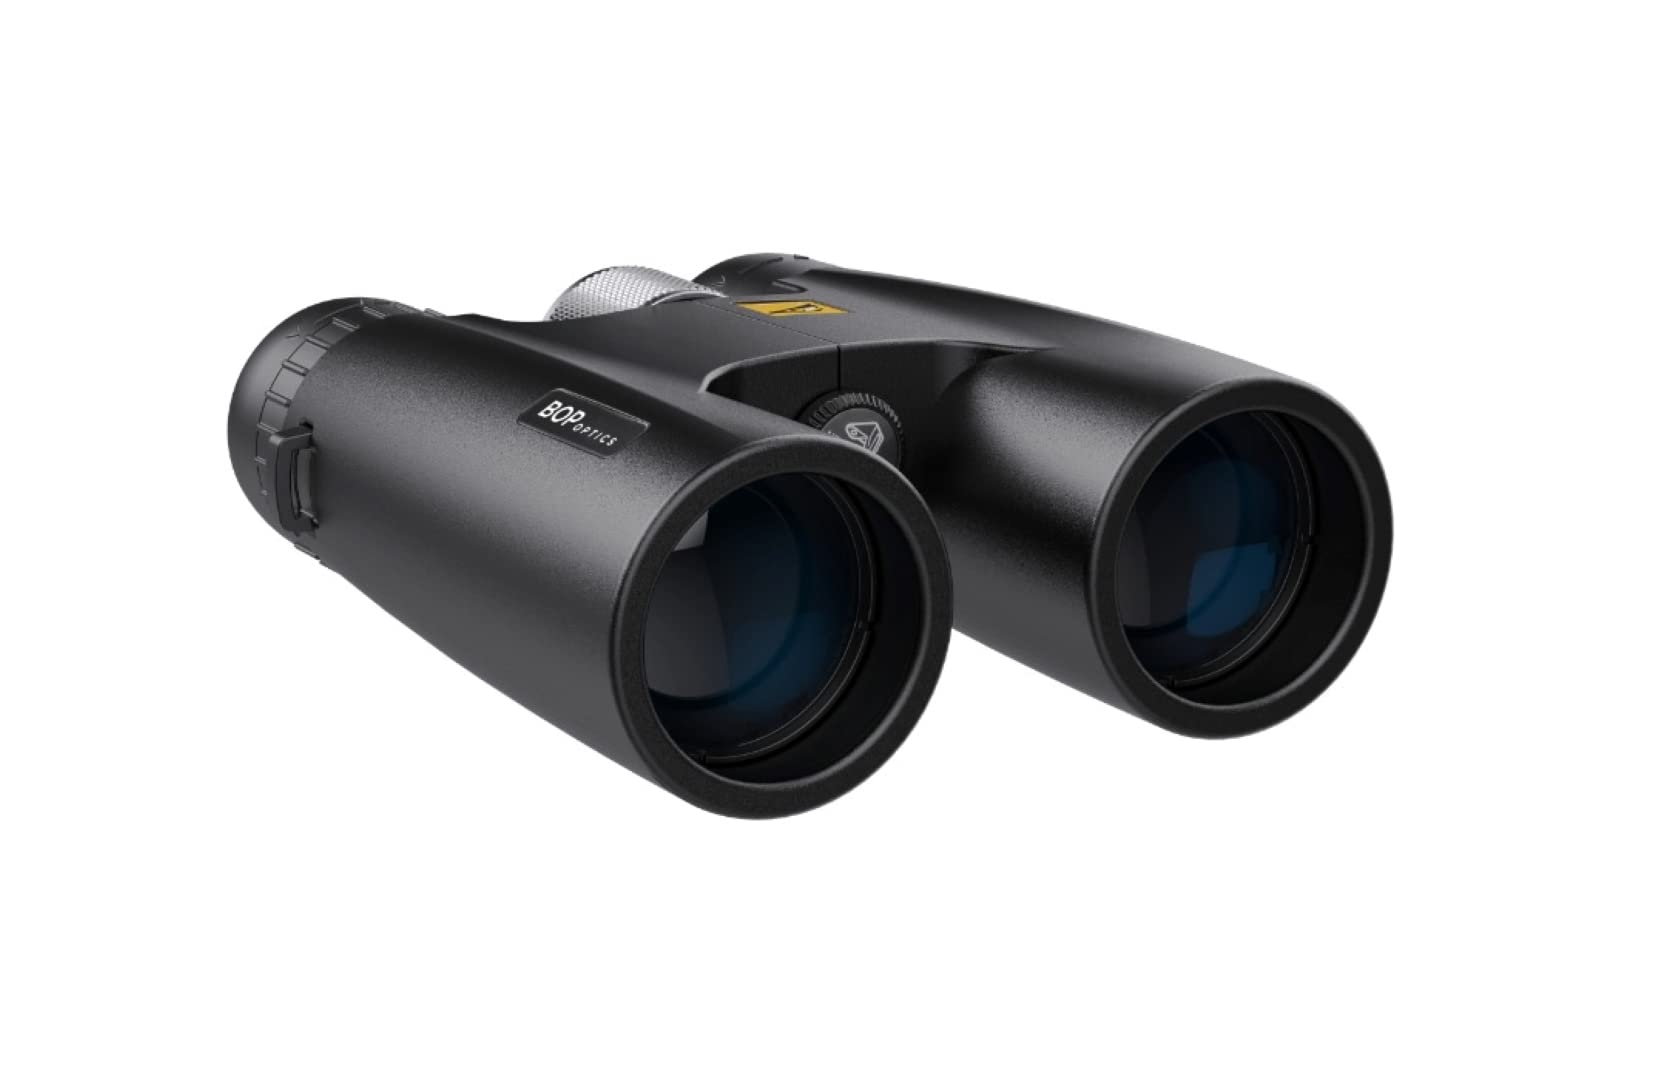 Birds of Prey Optics 10x42 Binoculars for Adults High Powered - HD Binoculars for Bird Watching, Binoculars for Hunting w. Carrying Bag - Travel Essentials, Cruise Ship Essentials and Camping Gear